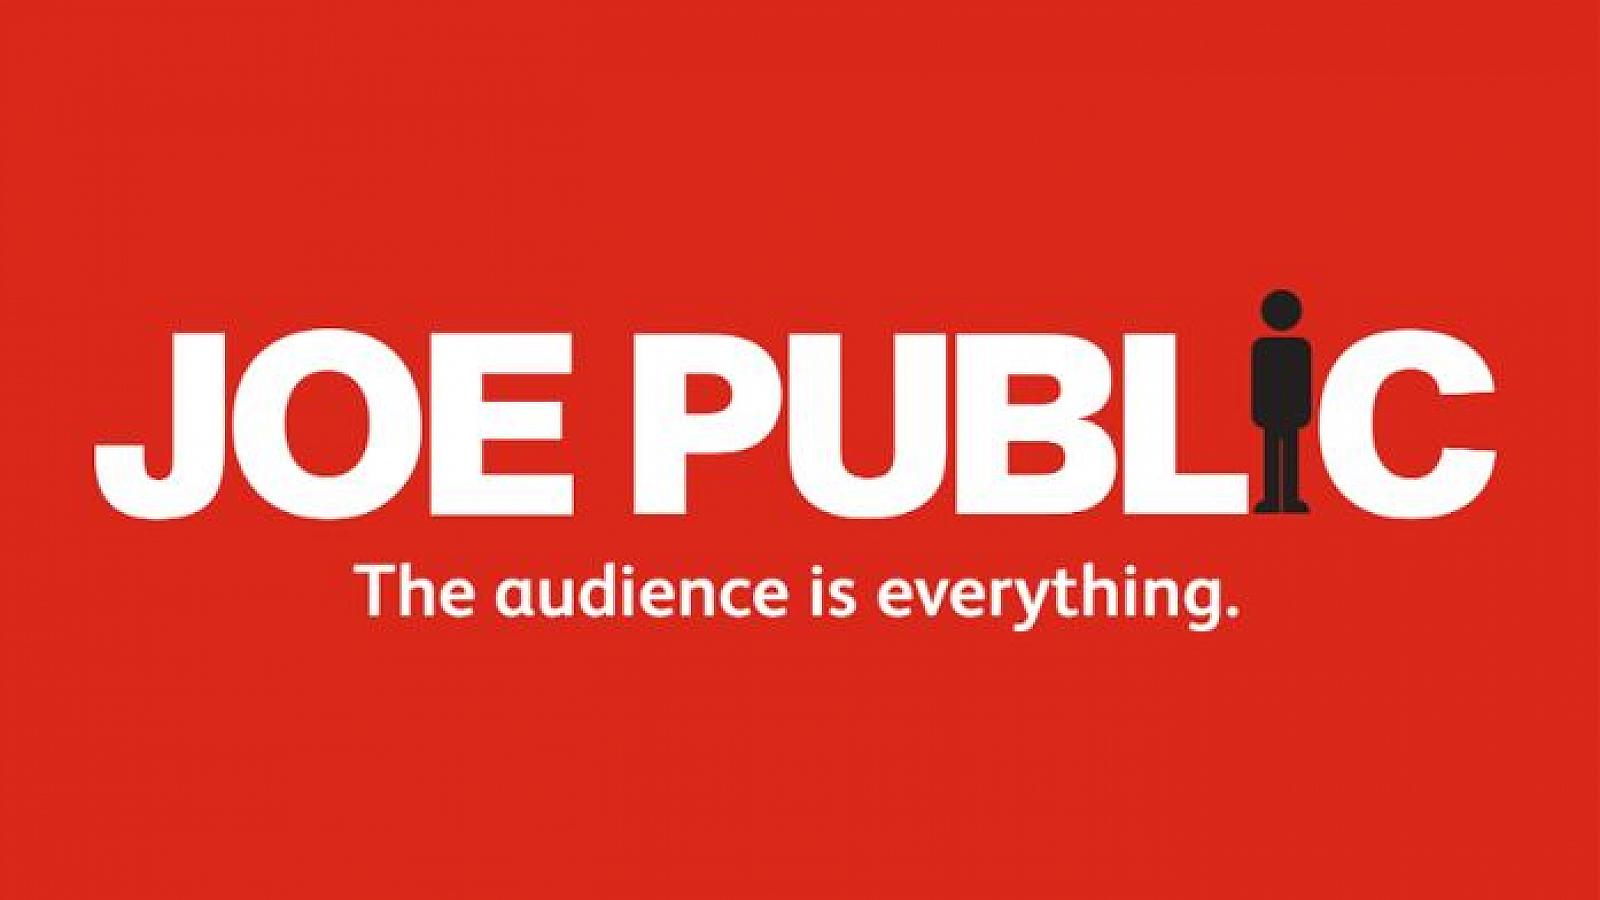 Marketing company Joe Public closes due to ‘loss of revenue’